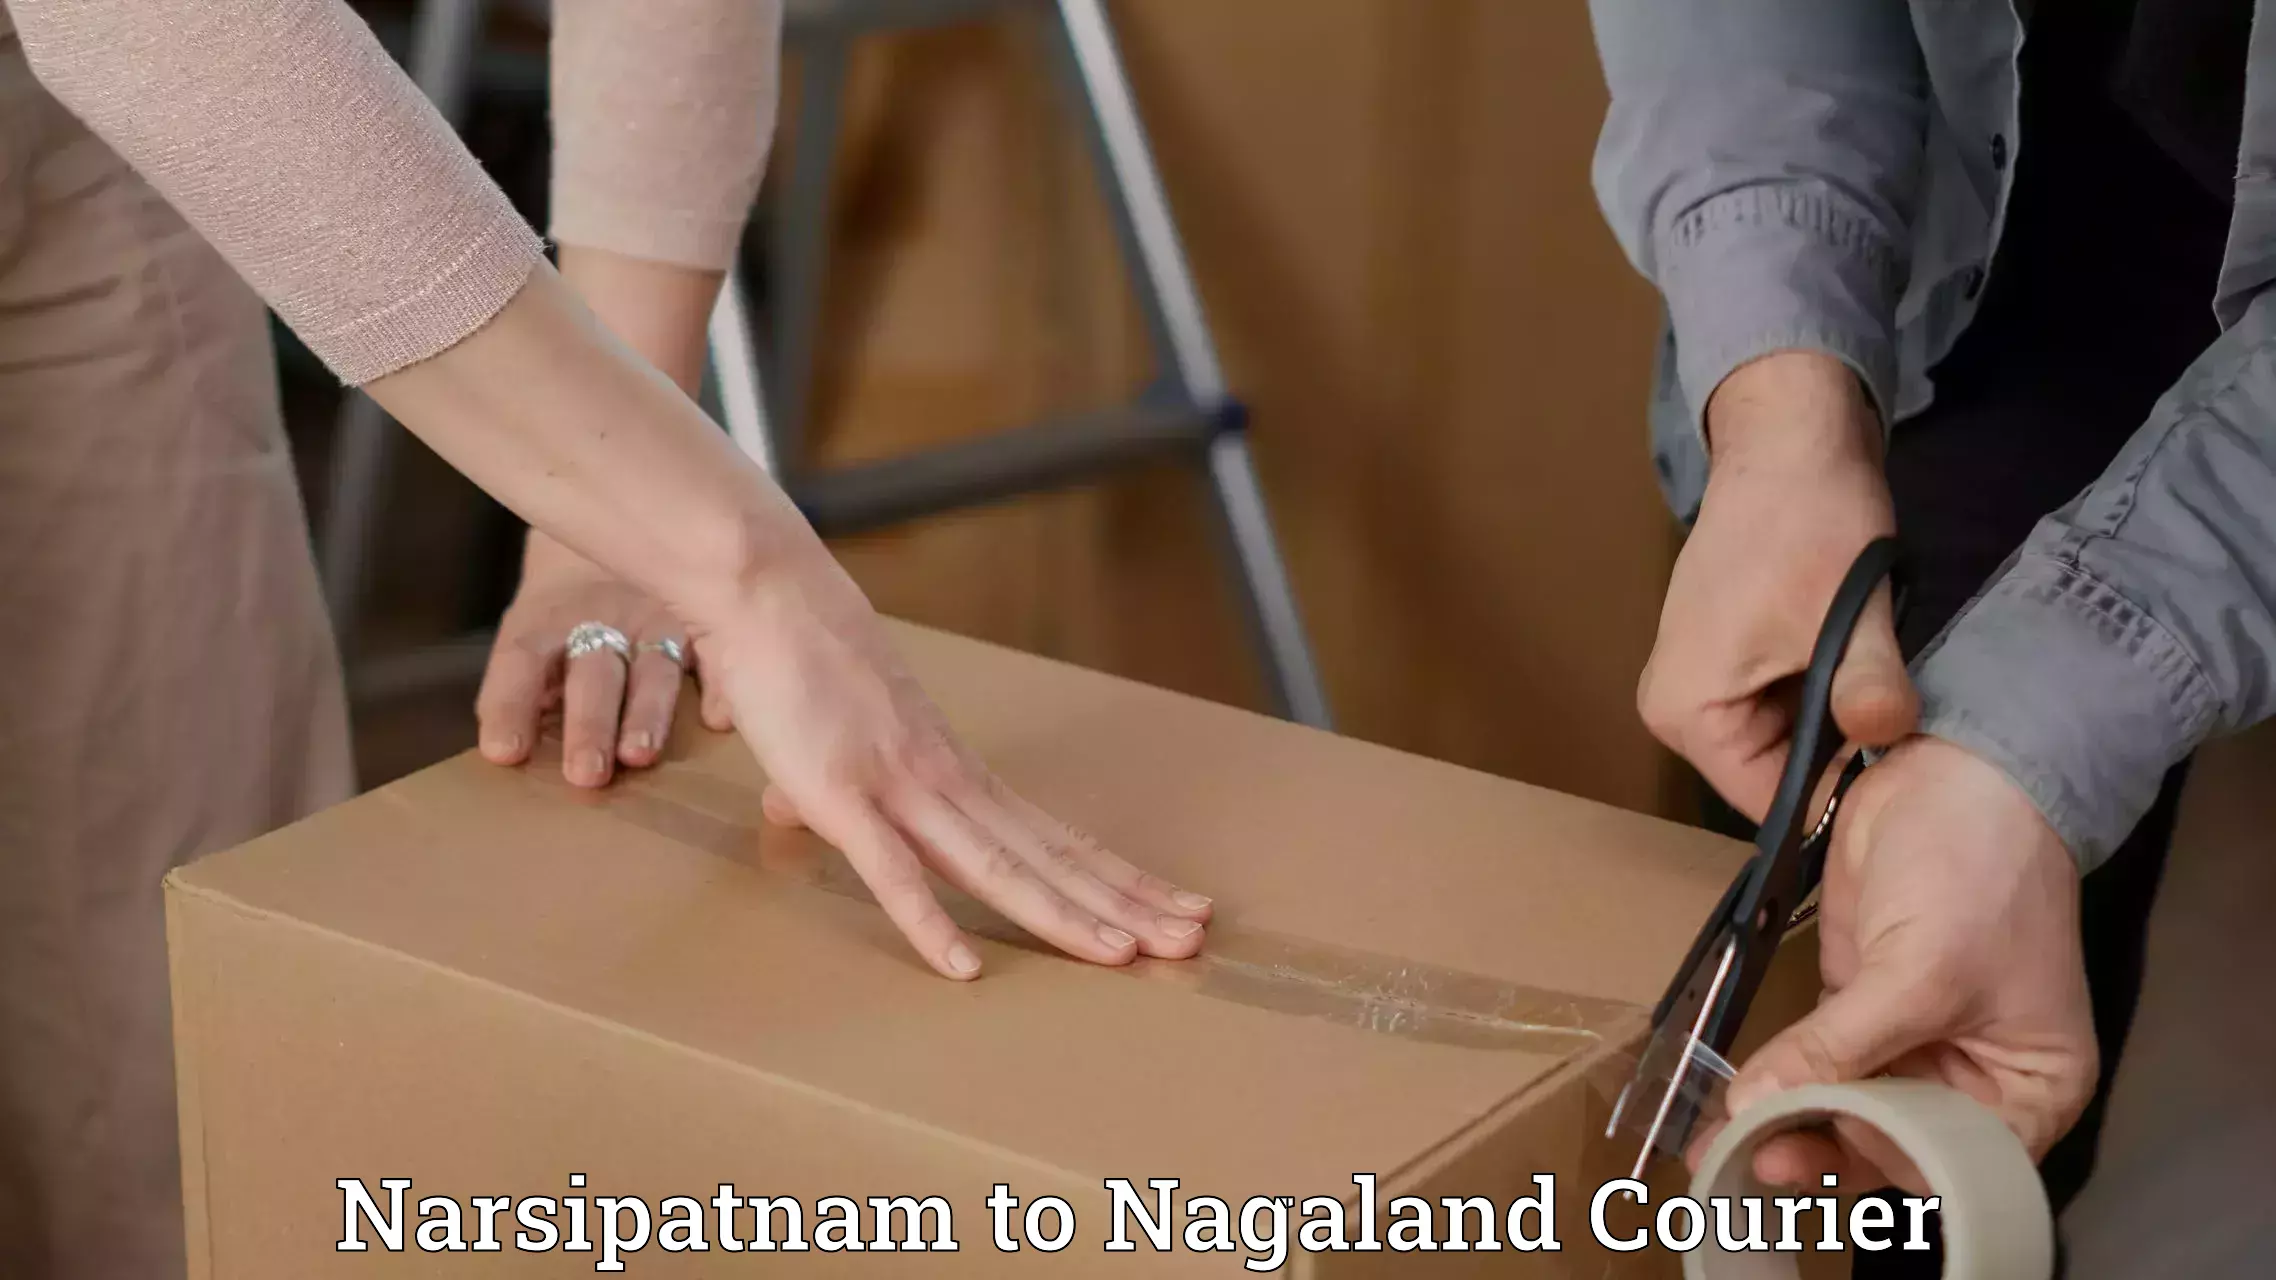 Cash on delivery service Narsipatnam to Dimapur